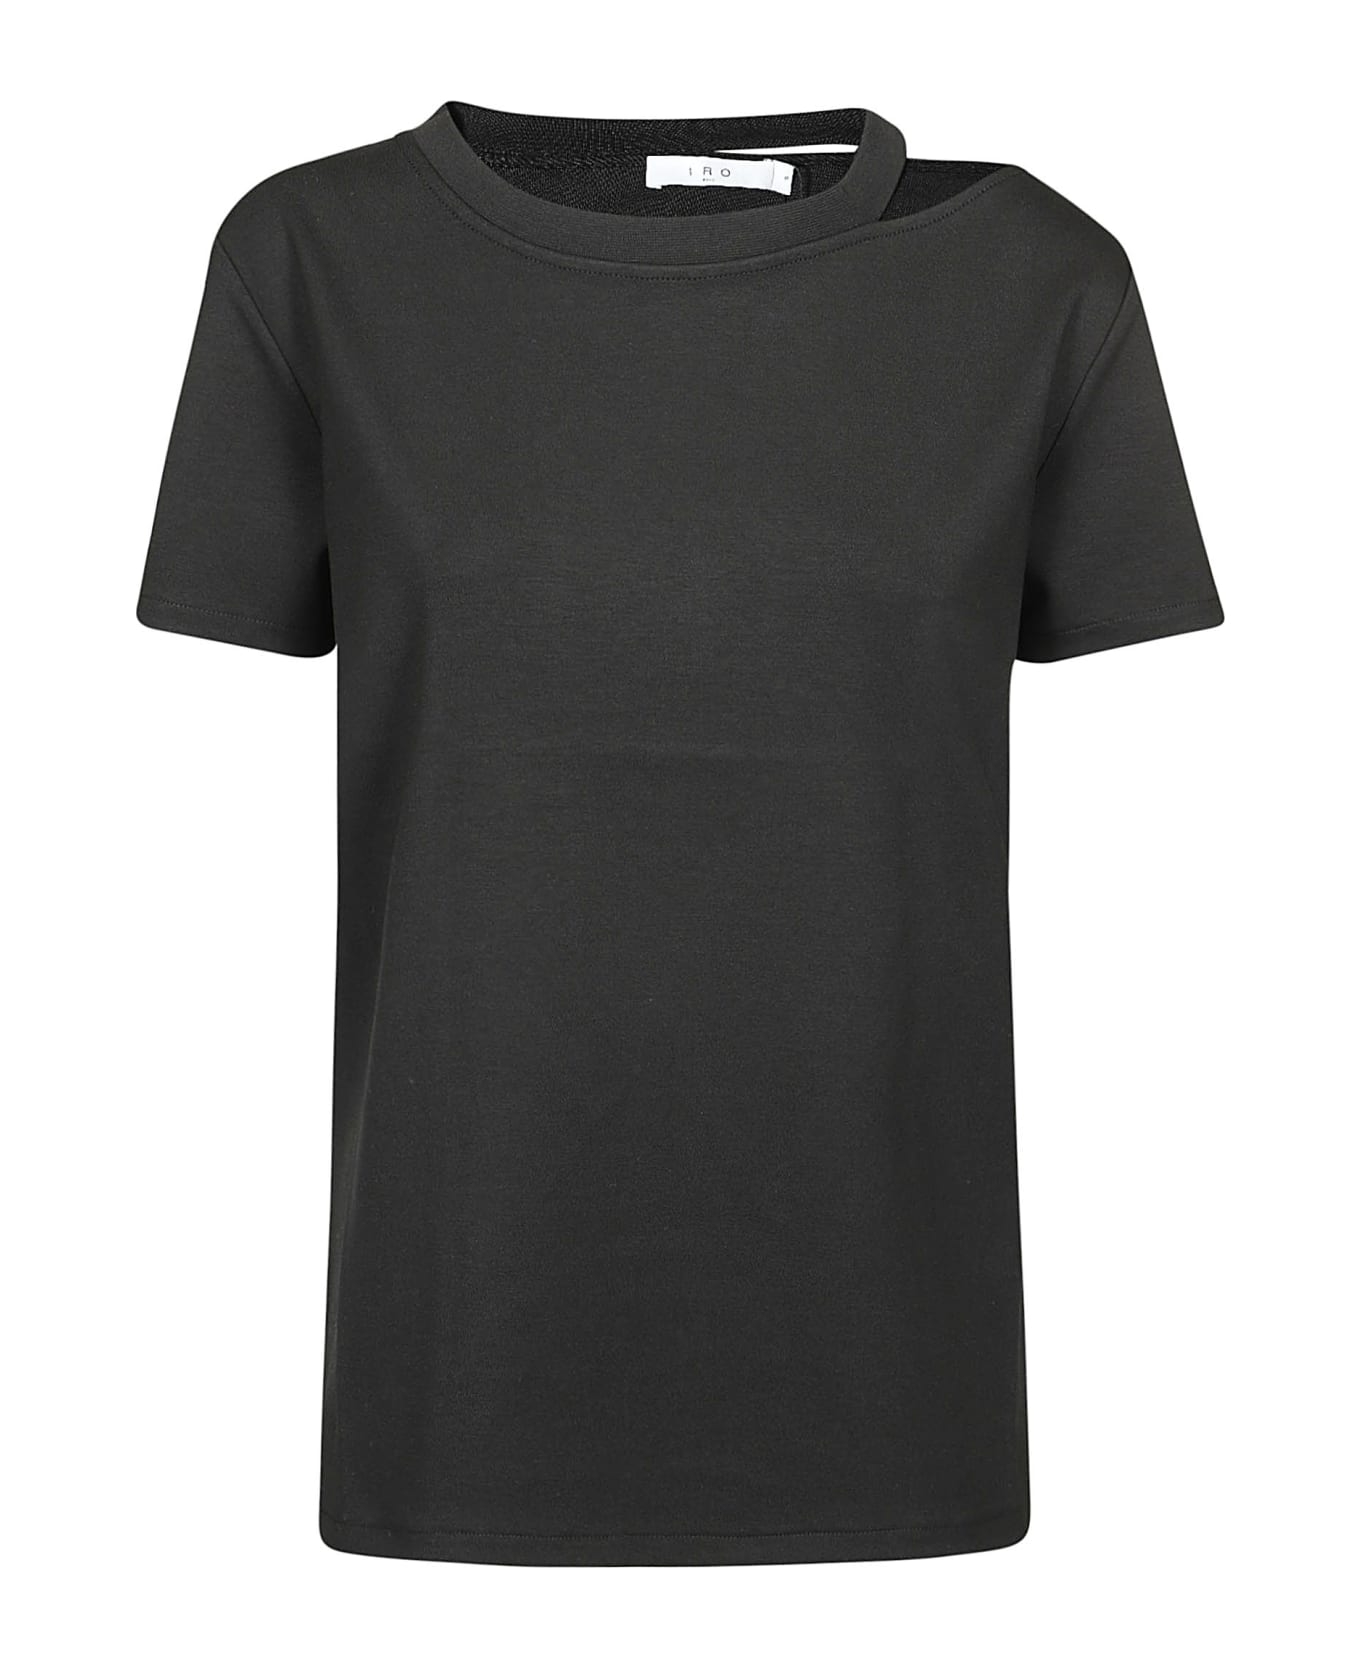 IRO Auranie T-shirt - Black